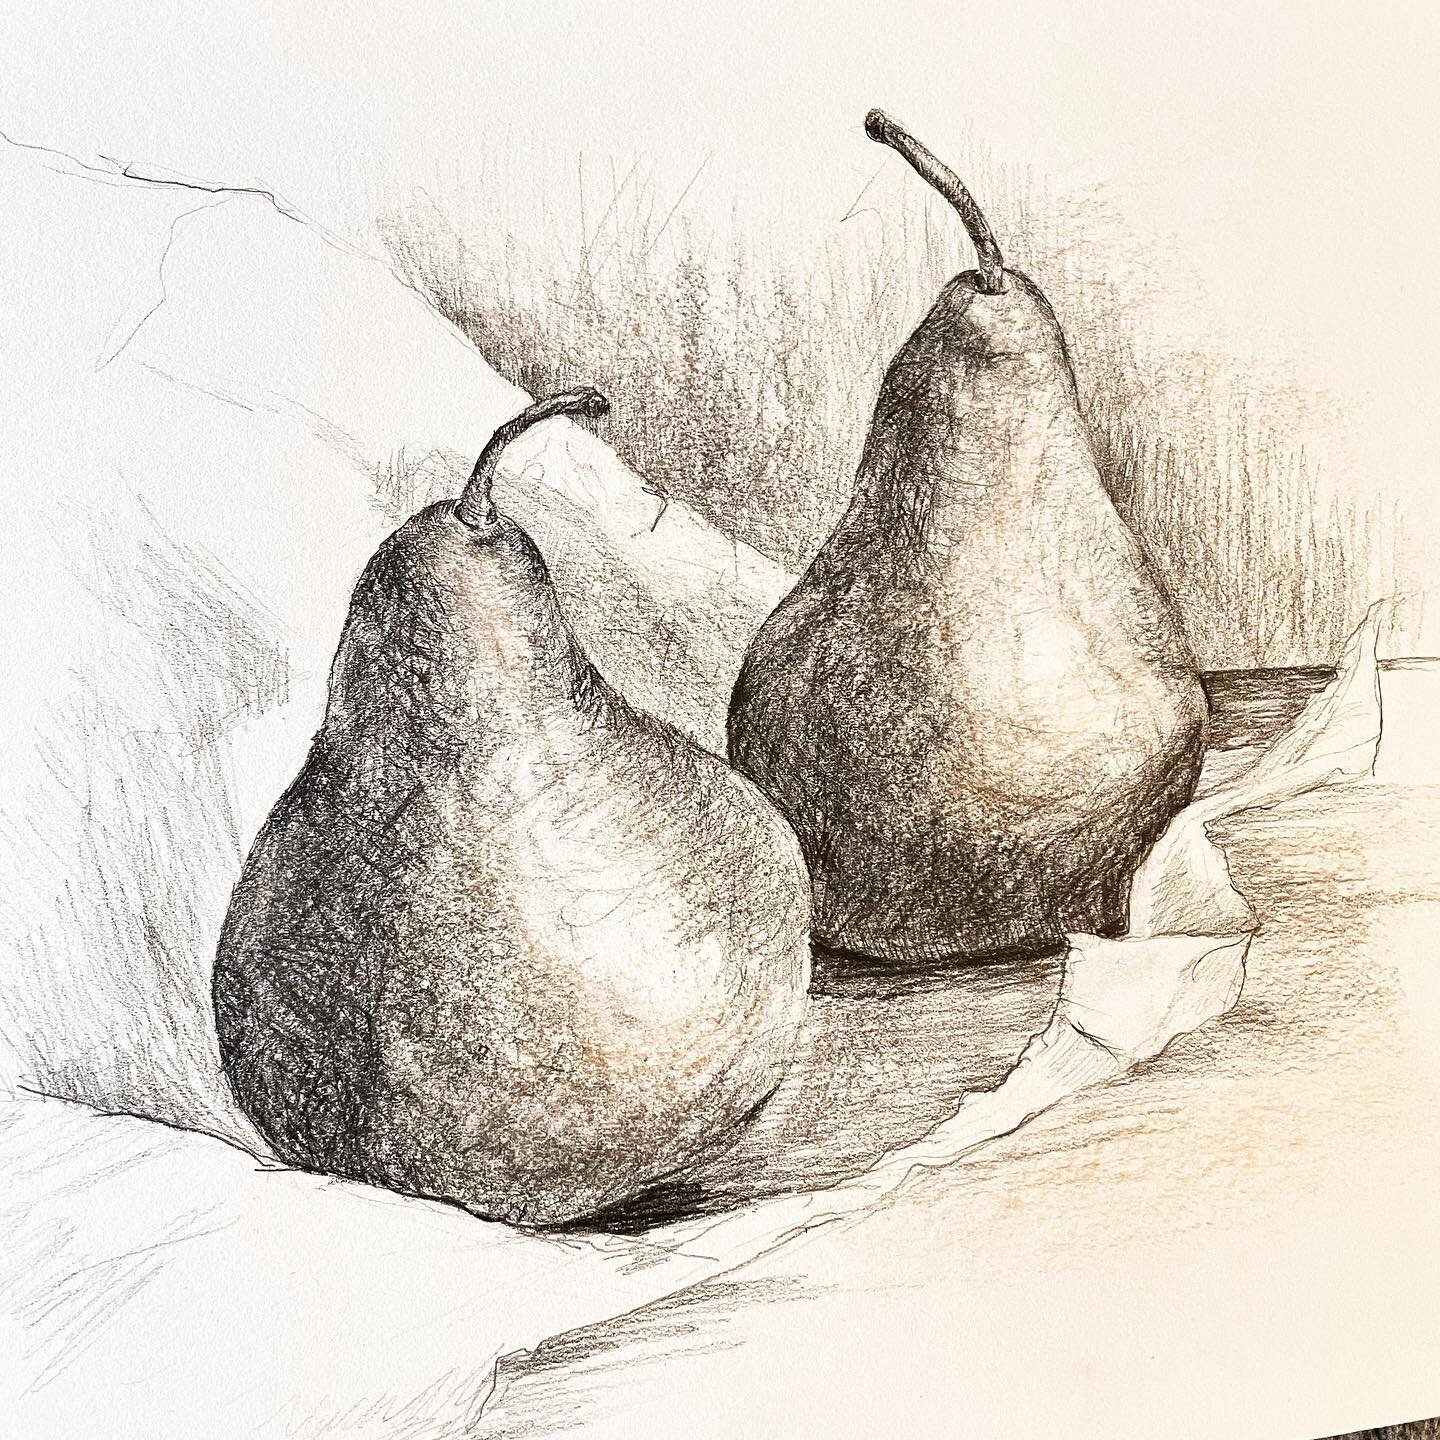 Simple pleasures

#stilllife #backtobasics #academicpainting #pears #peardrawing 
#drawingstudy #launcestontasmania #tasmanianartist #tasmanianart #sikorskameikle #learntodraw #learningdrawing #fruitdrawing #crosshatching #artist_sharing #drawingofth